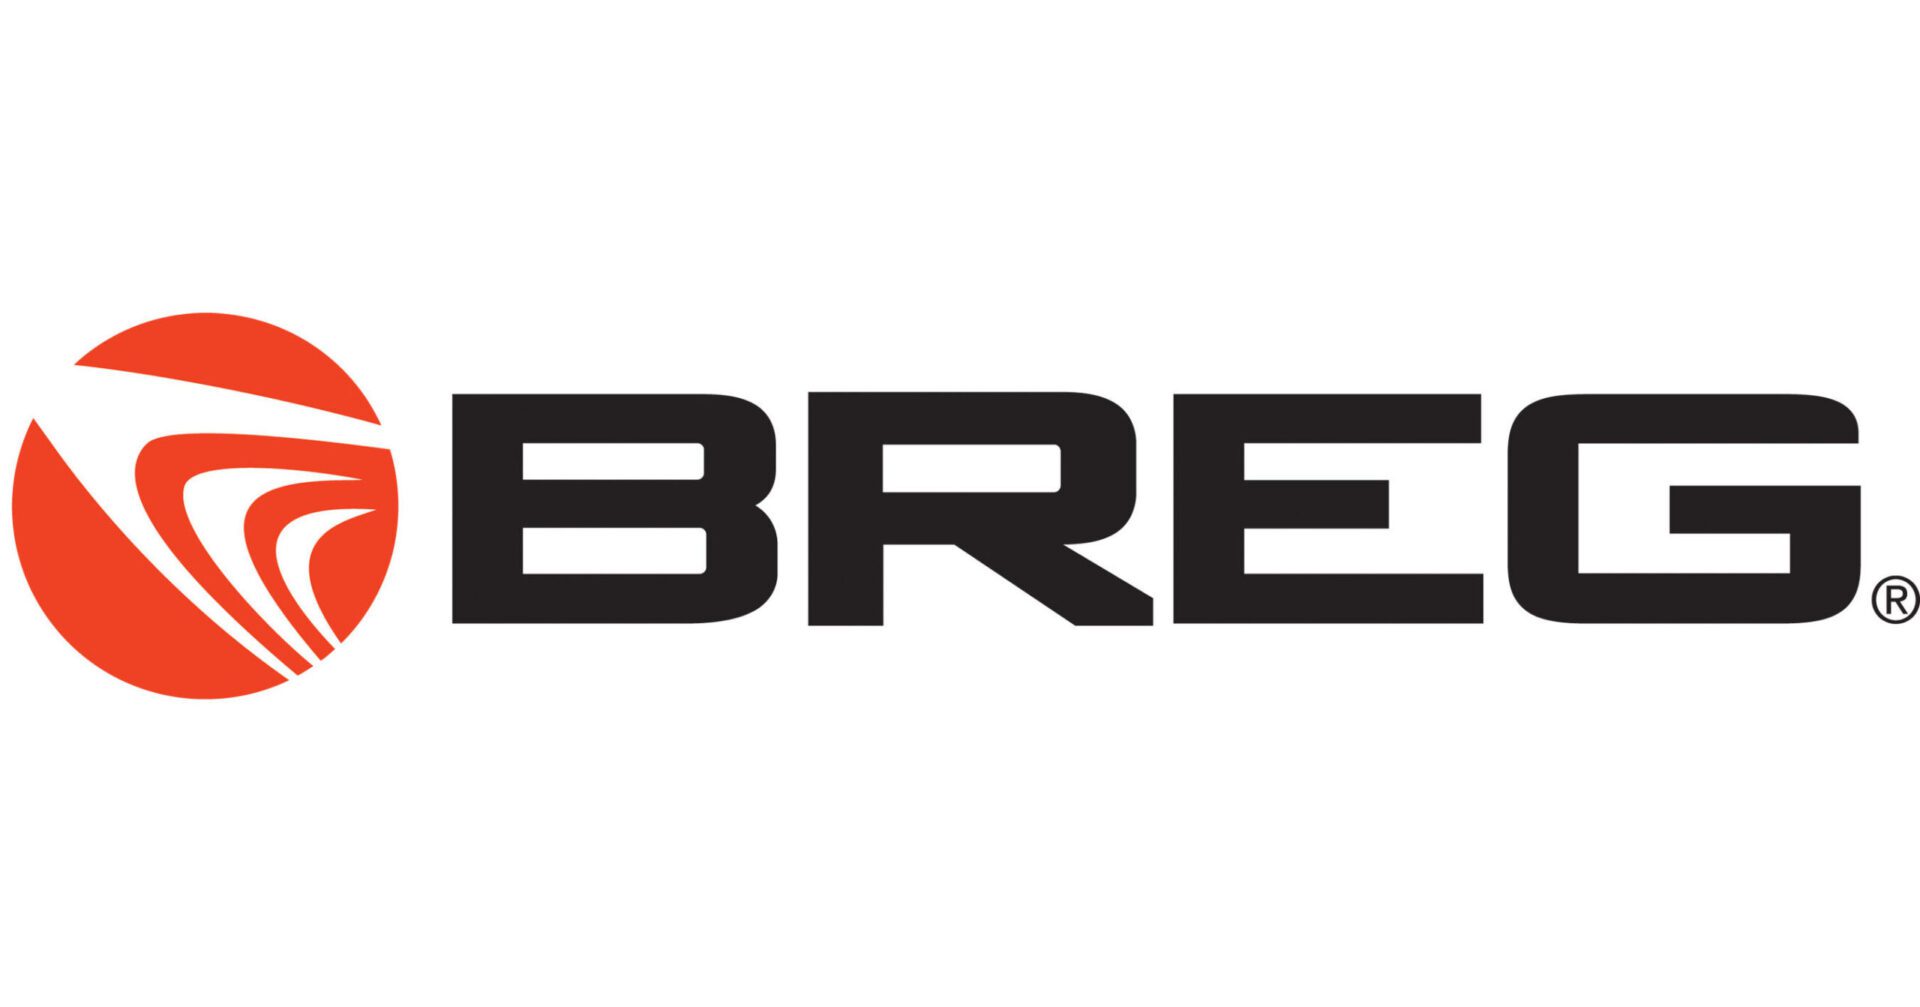 Breg Inc., Carlsbad, CA (PRNewsFoto/Breg, Inc.)